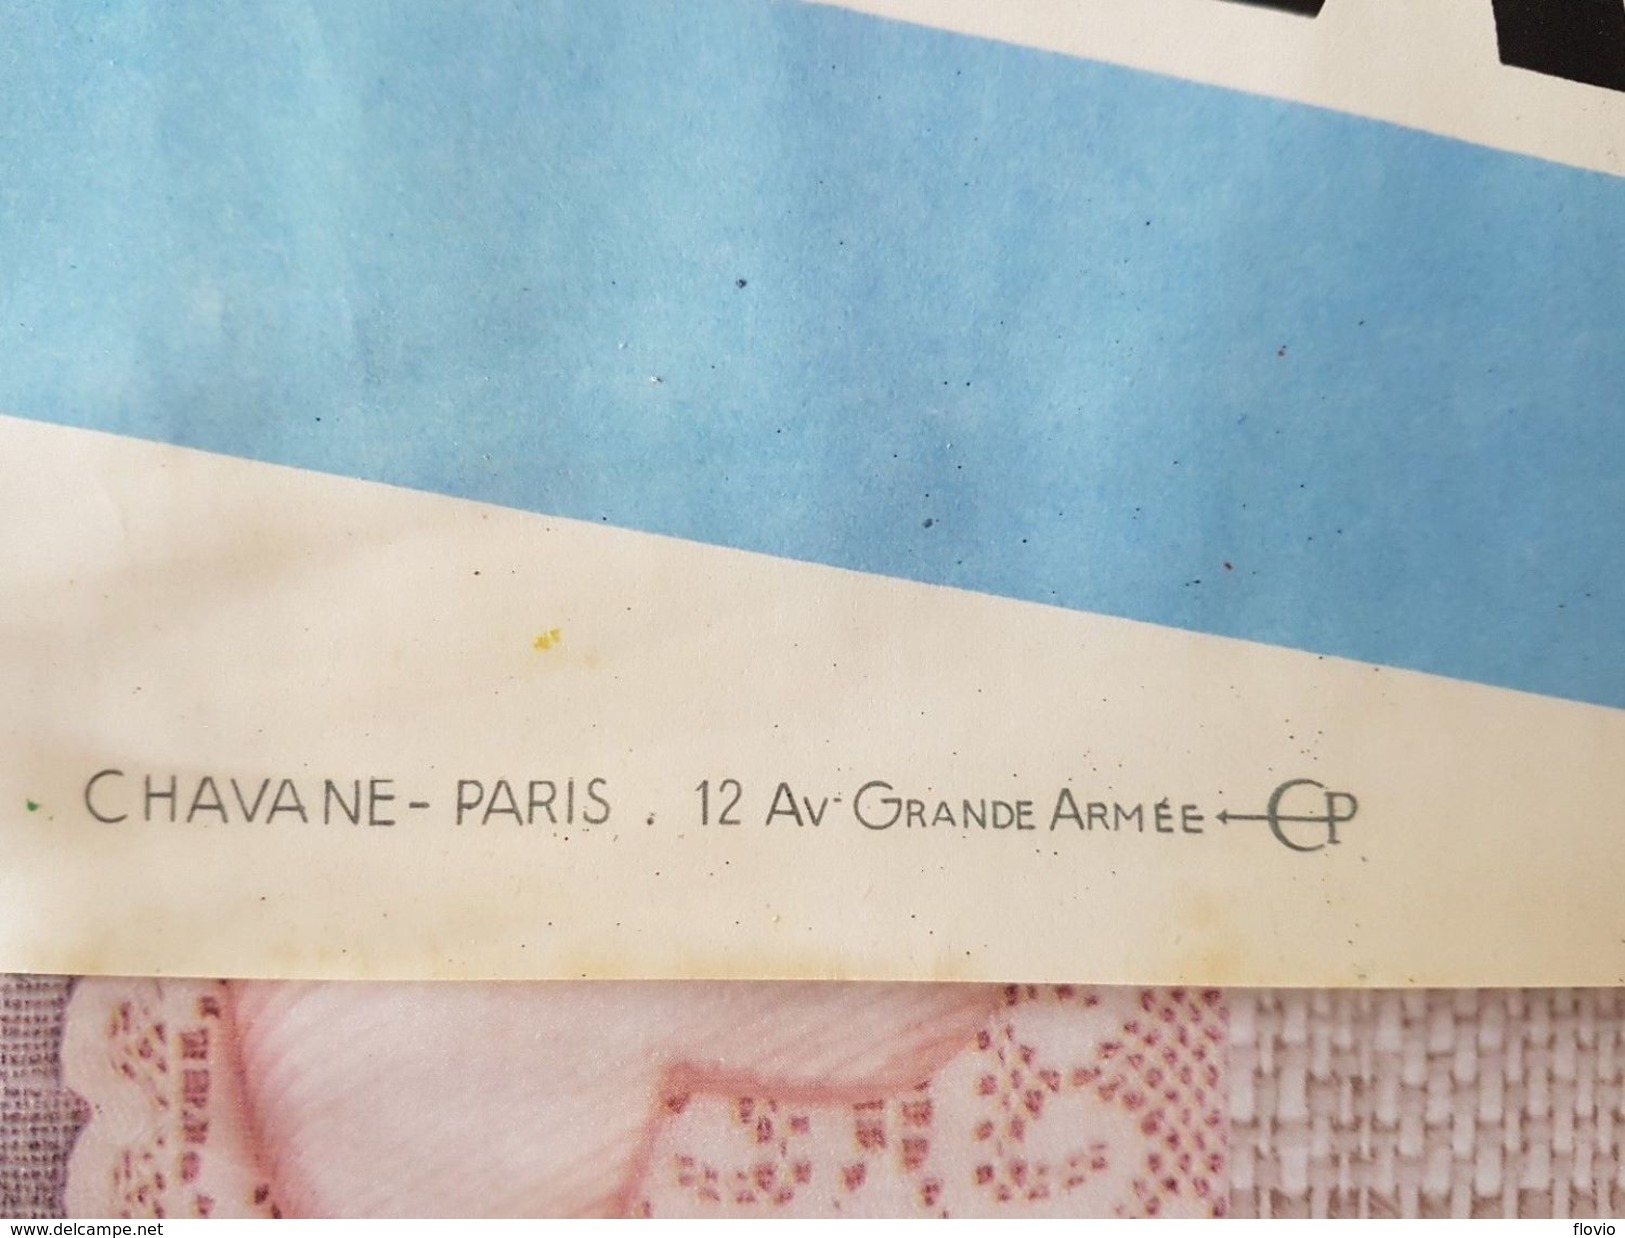 FROMAGE LA VACHE QUI RIT BENJAMIN RABIER RARE AFFICHE PUBLICITAIRE 1948 SUPERBE - Posters